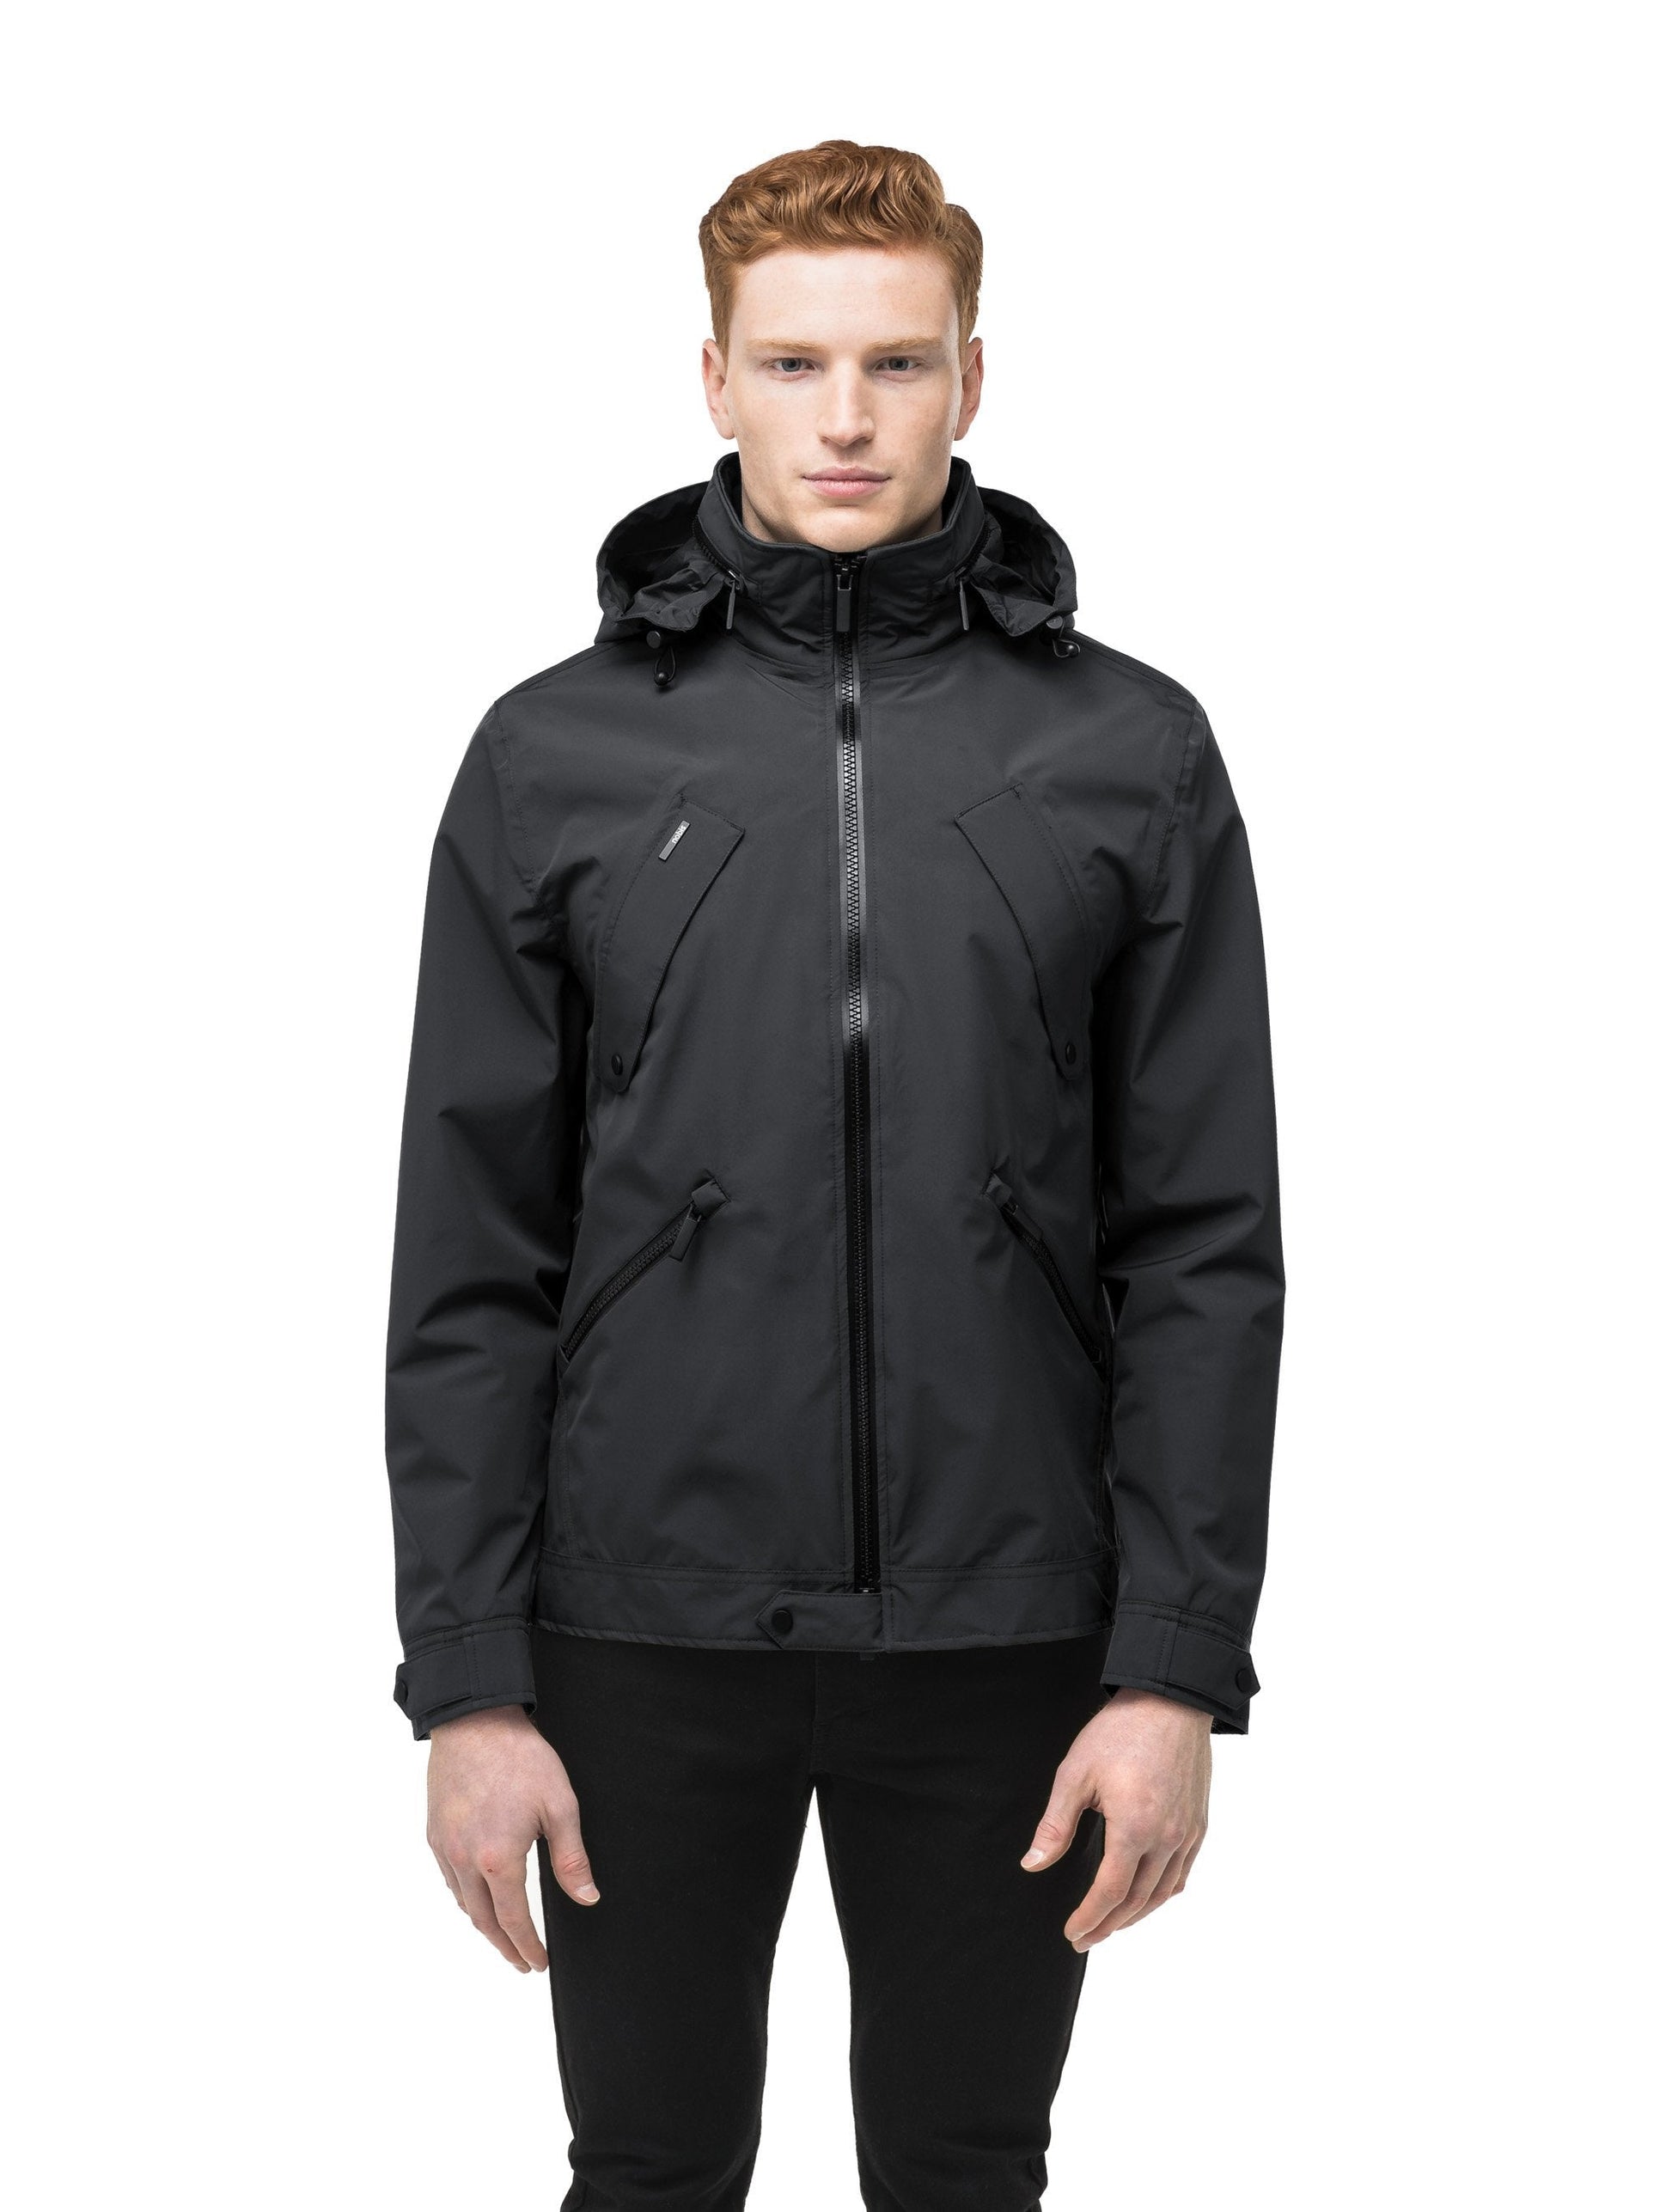 Men's waist length waterproof jacket with exposed zipper in Black